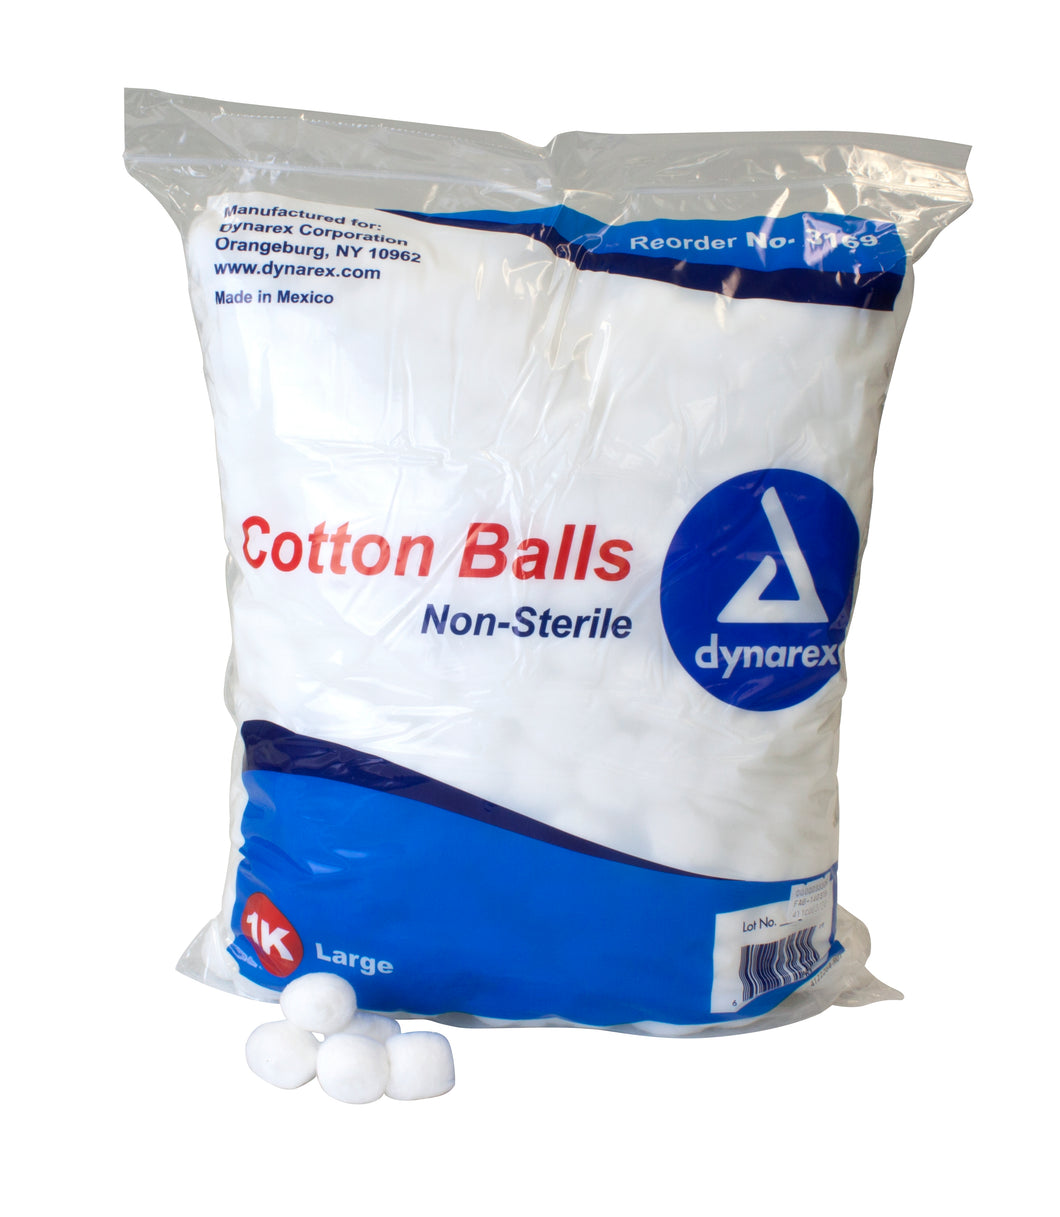 dynarex(R) Large Cotton Balls, 1,000-bag